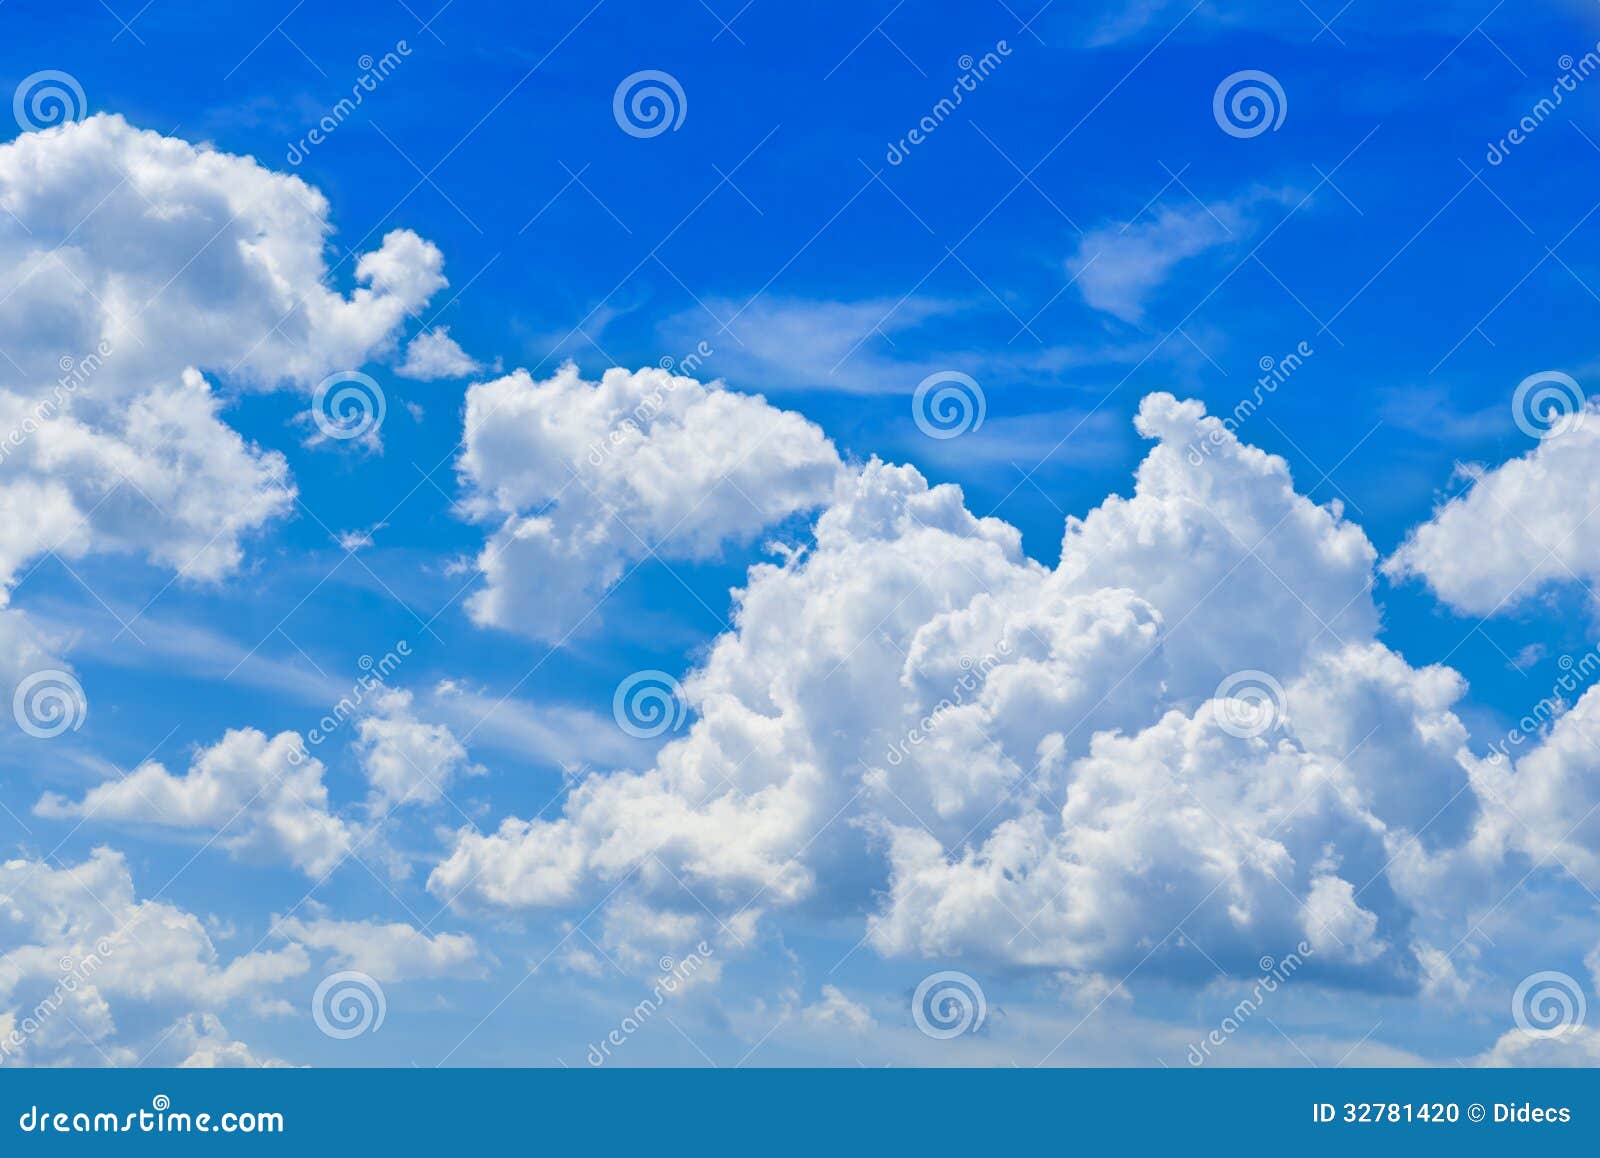 Голубое небо с облаками. Ясное голубое небо с облаками.